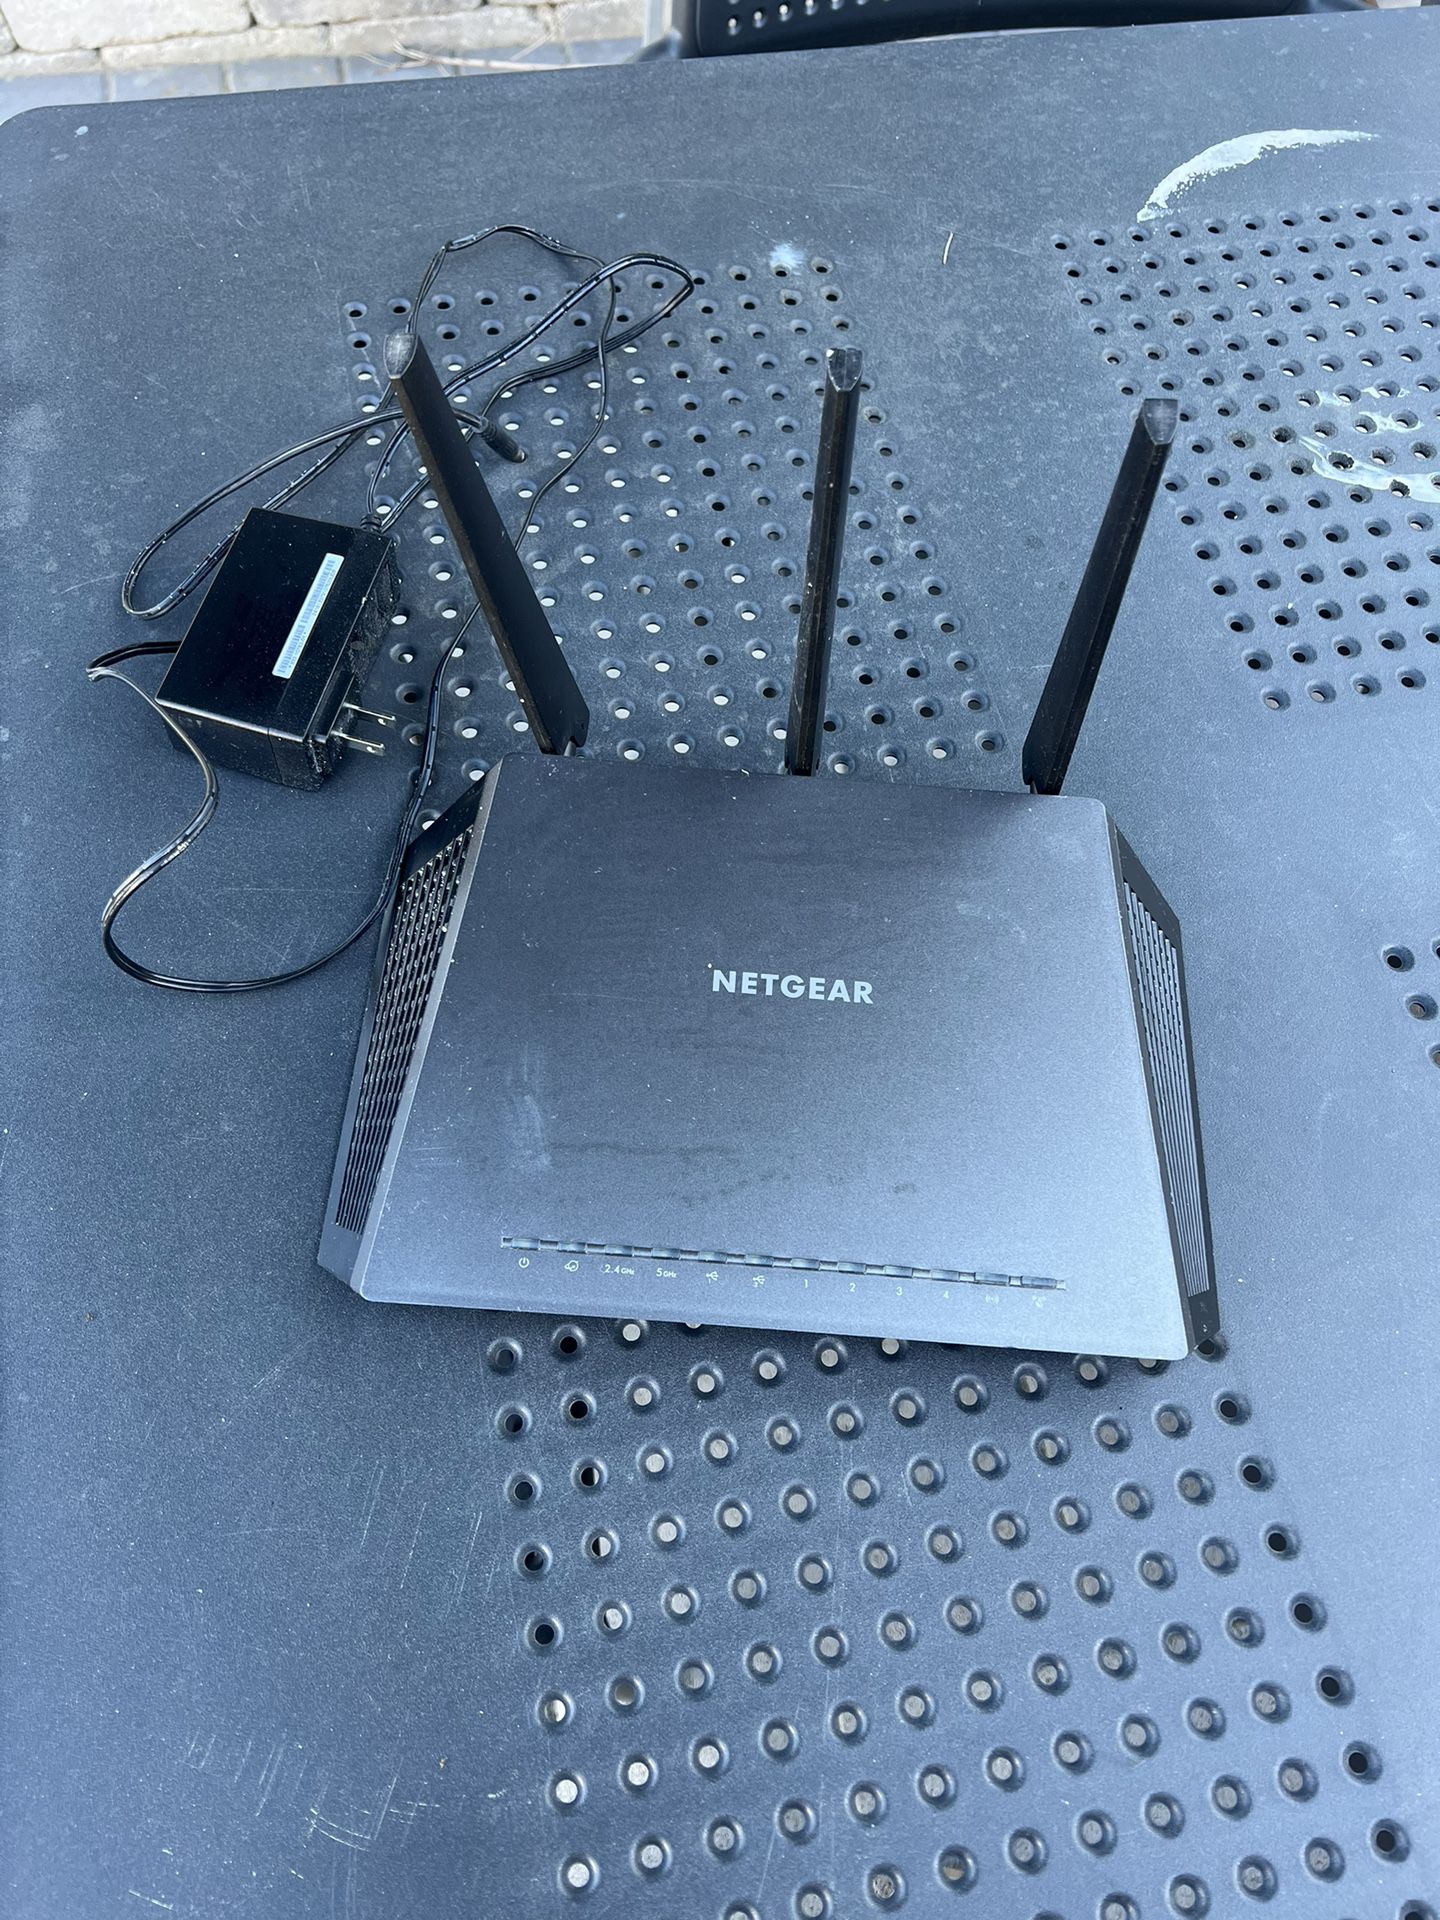 Netgear Nighthawk AC1900 WiFi Router (R7000)  Nighthawk Dual-Band WiFi Router, 1.9Gbps